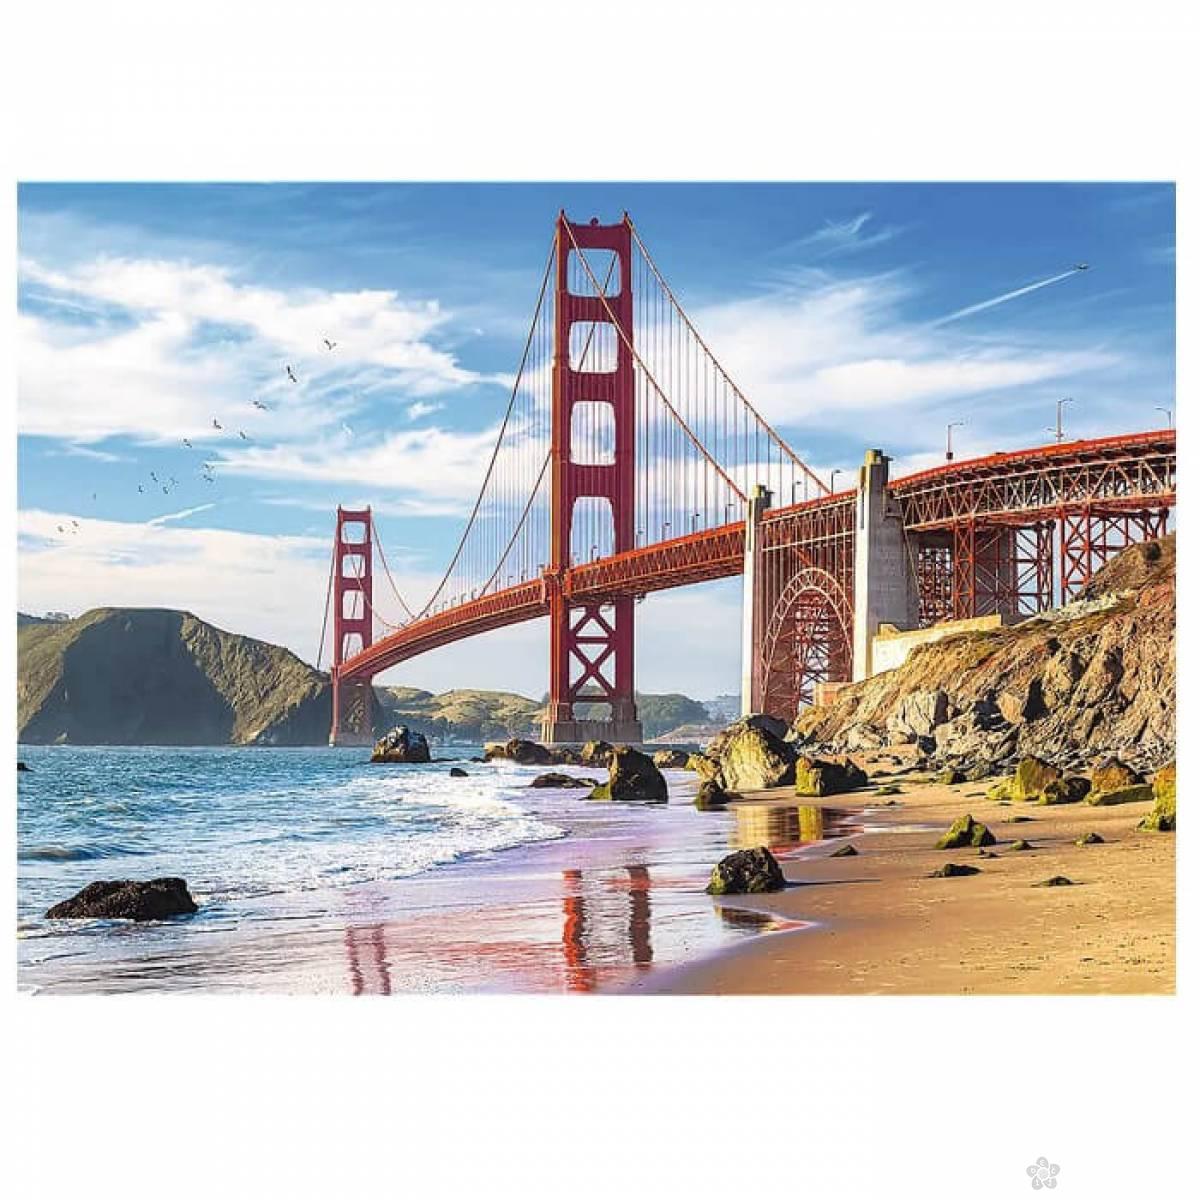 Puzzla Golden Gate Bridge, San Francisco T10722 